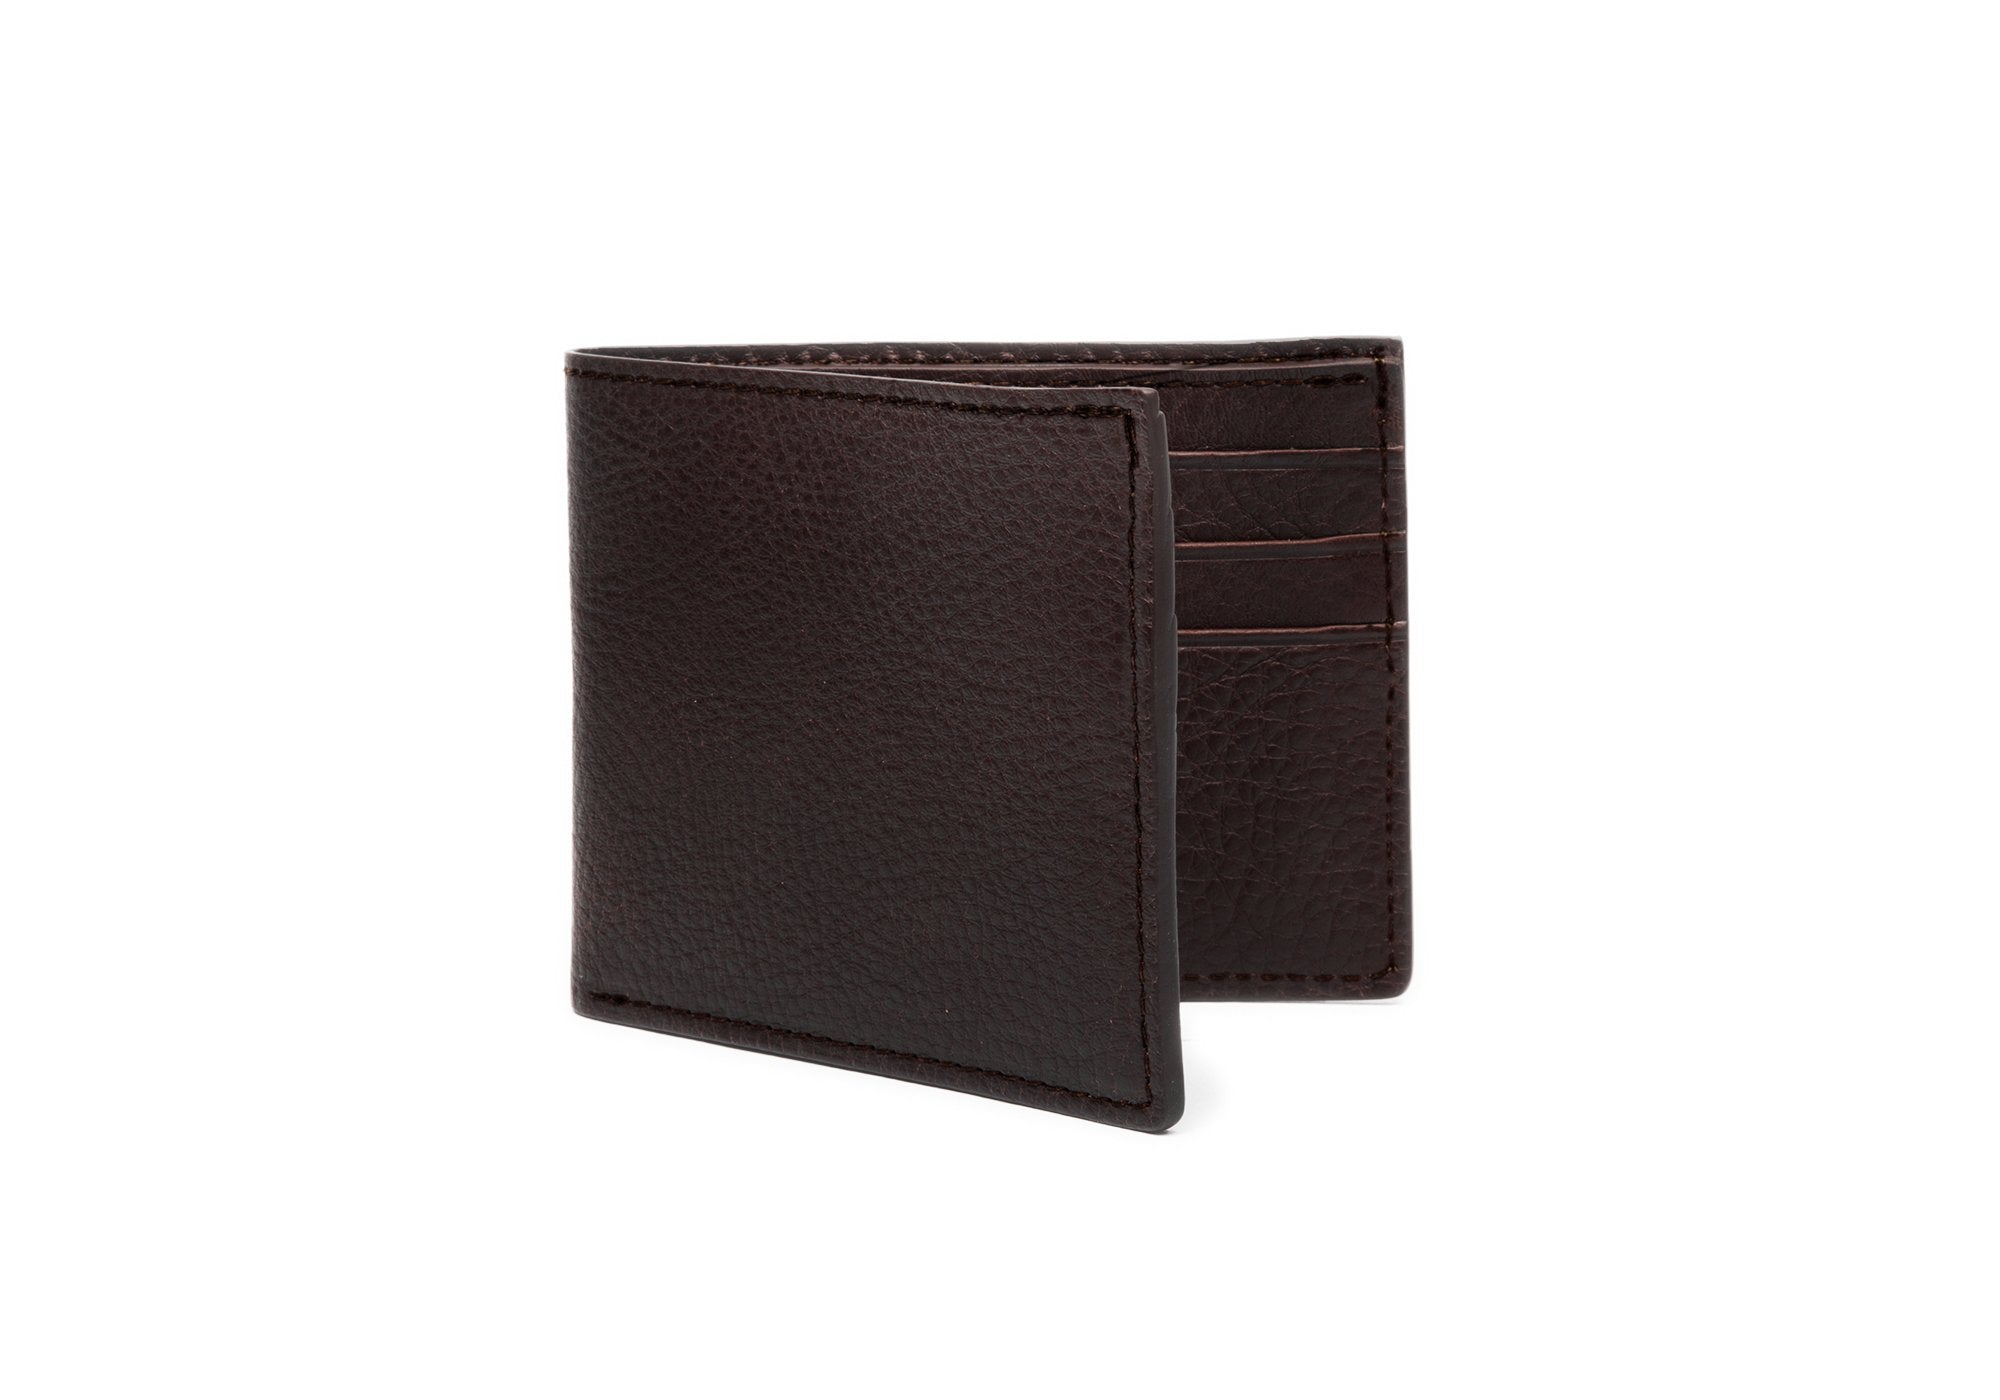 GENUINE LEATHER WALLET | Men Wallet| |Luxury Wallet | Short Purses | Brown  Black Wallet | Elegant Wallet| Design Wallet | Gift for Dad 